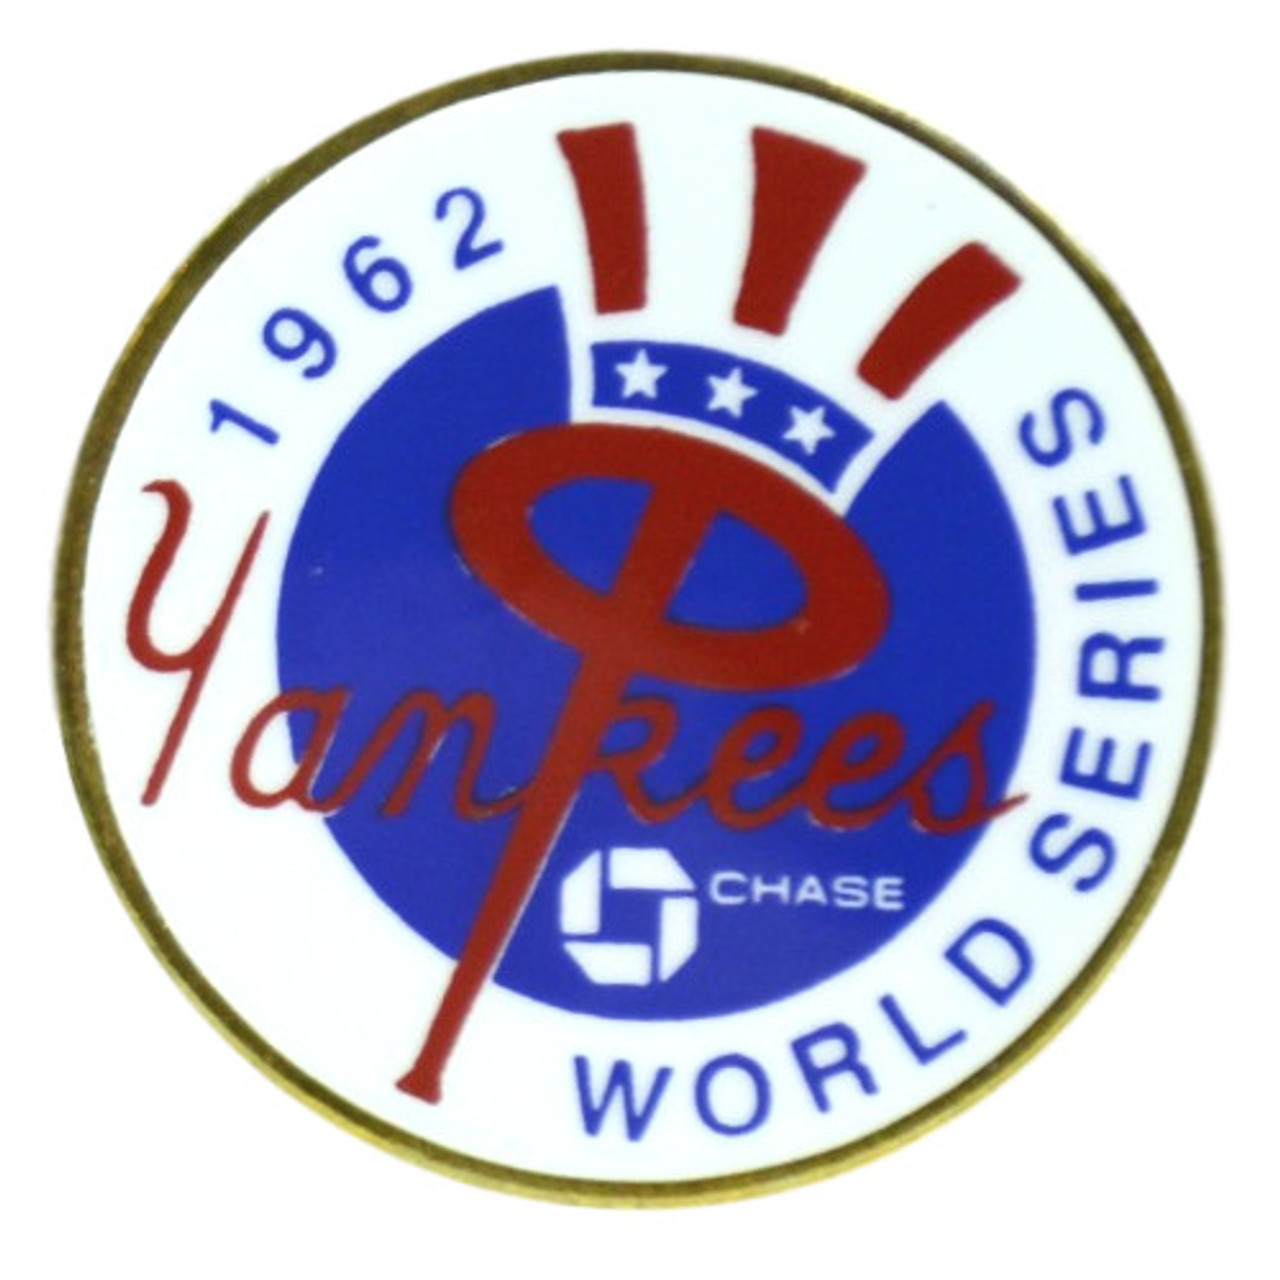 VINTAGE New York Yankees/Atlanta Braves 1996 World Series Pin NEW